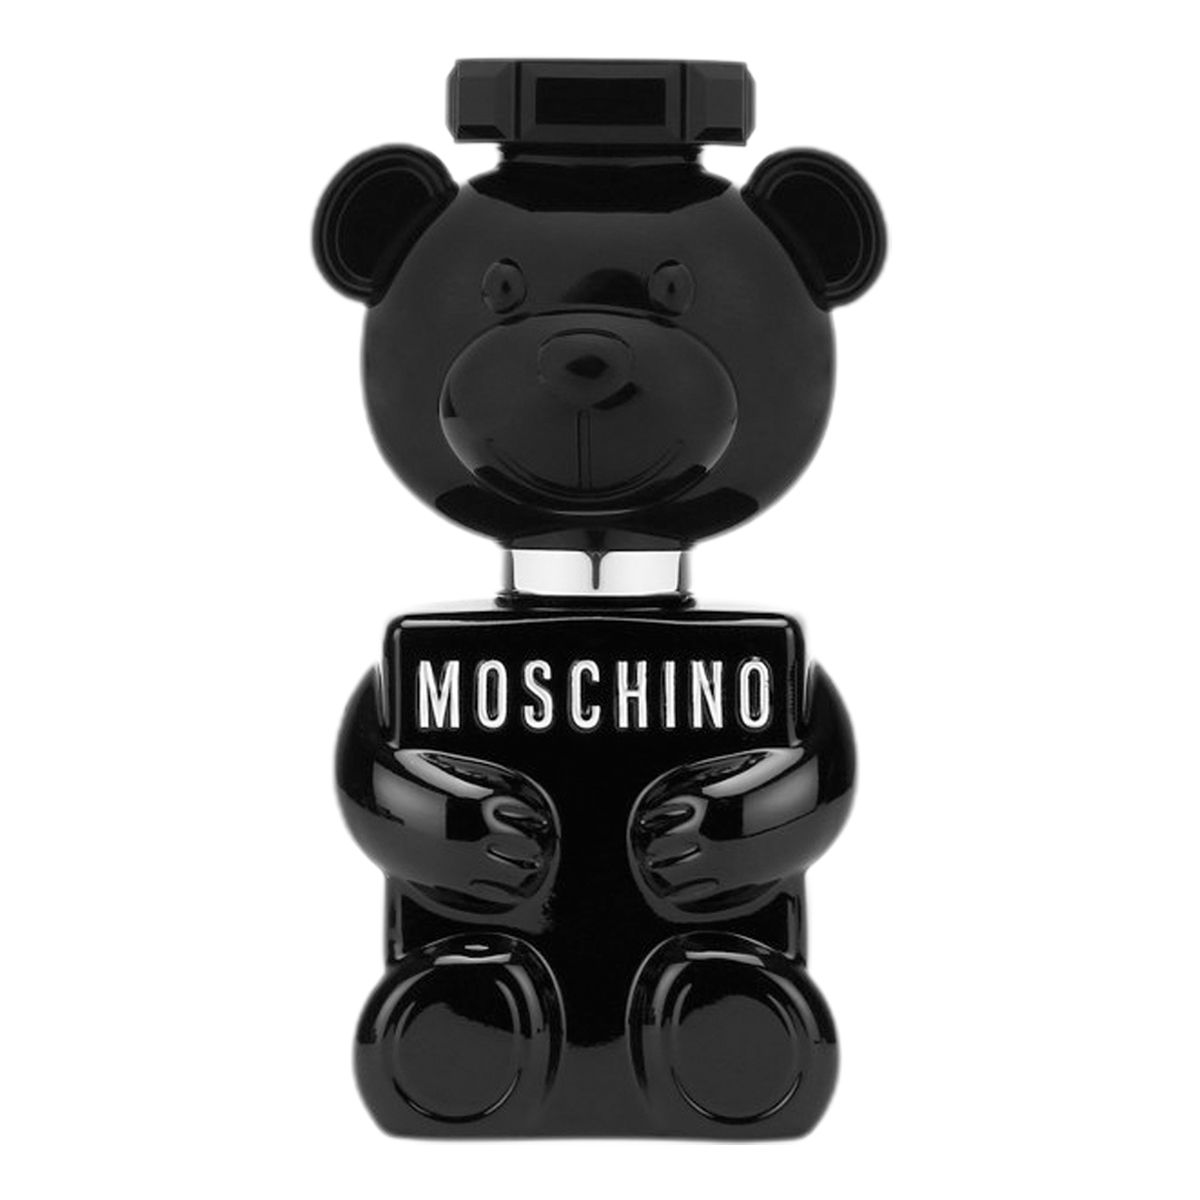  Moschino Toy Boy 